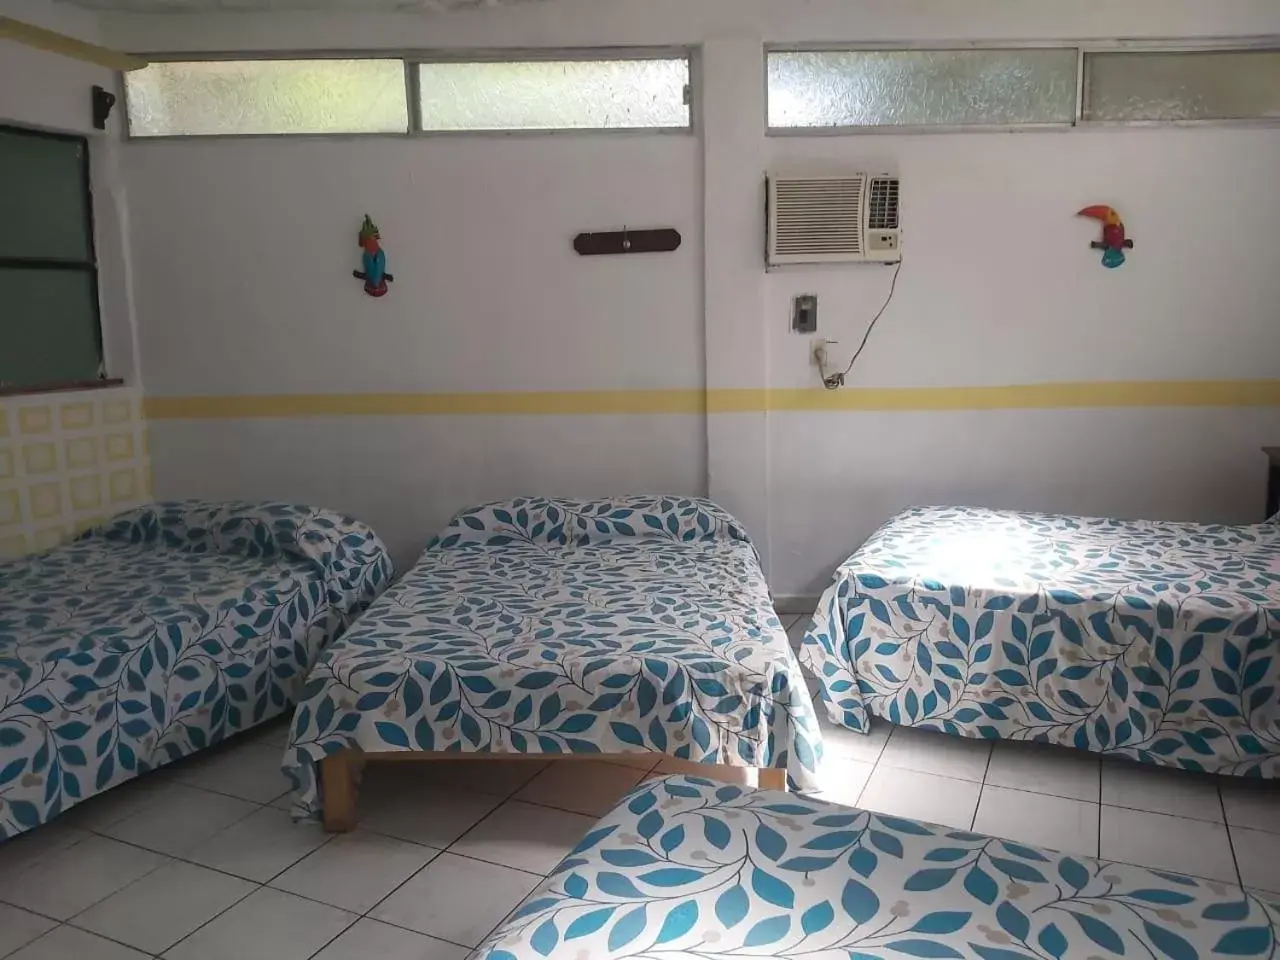 Bed, Room Photo in Hotel Ayalamar Manzanillo